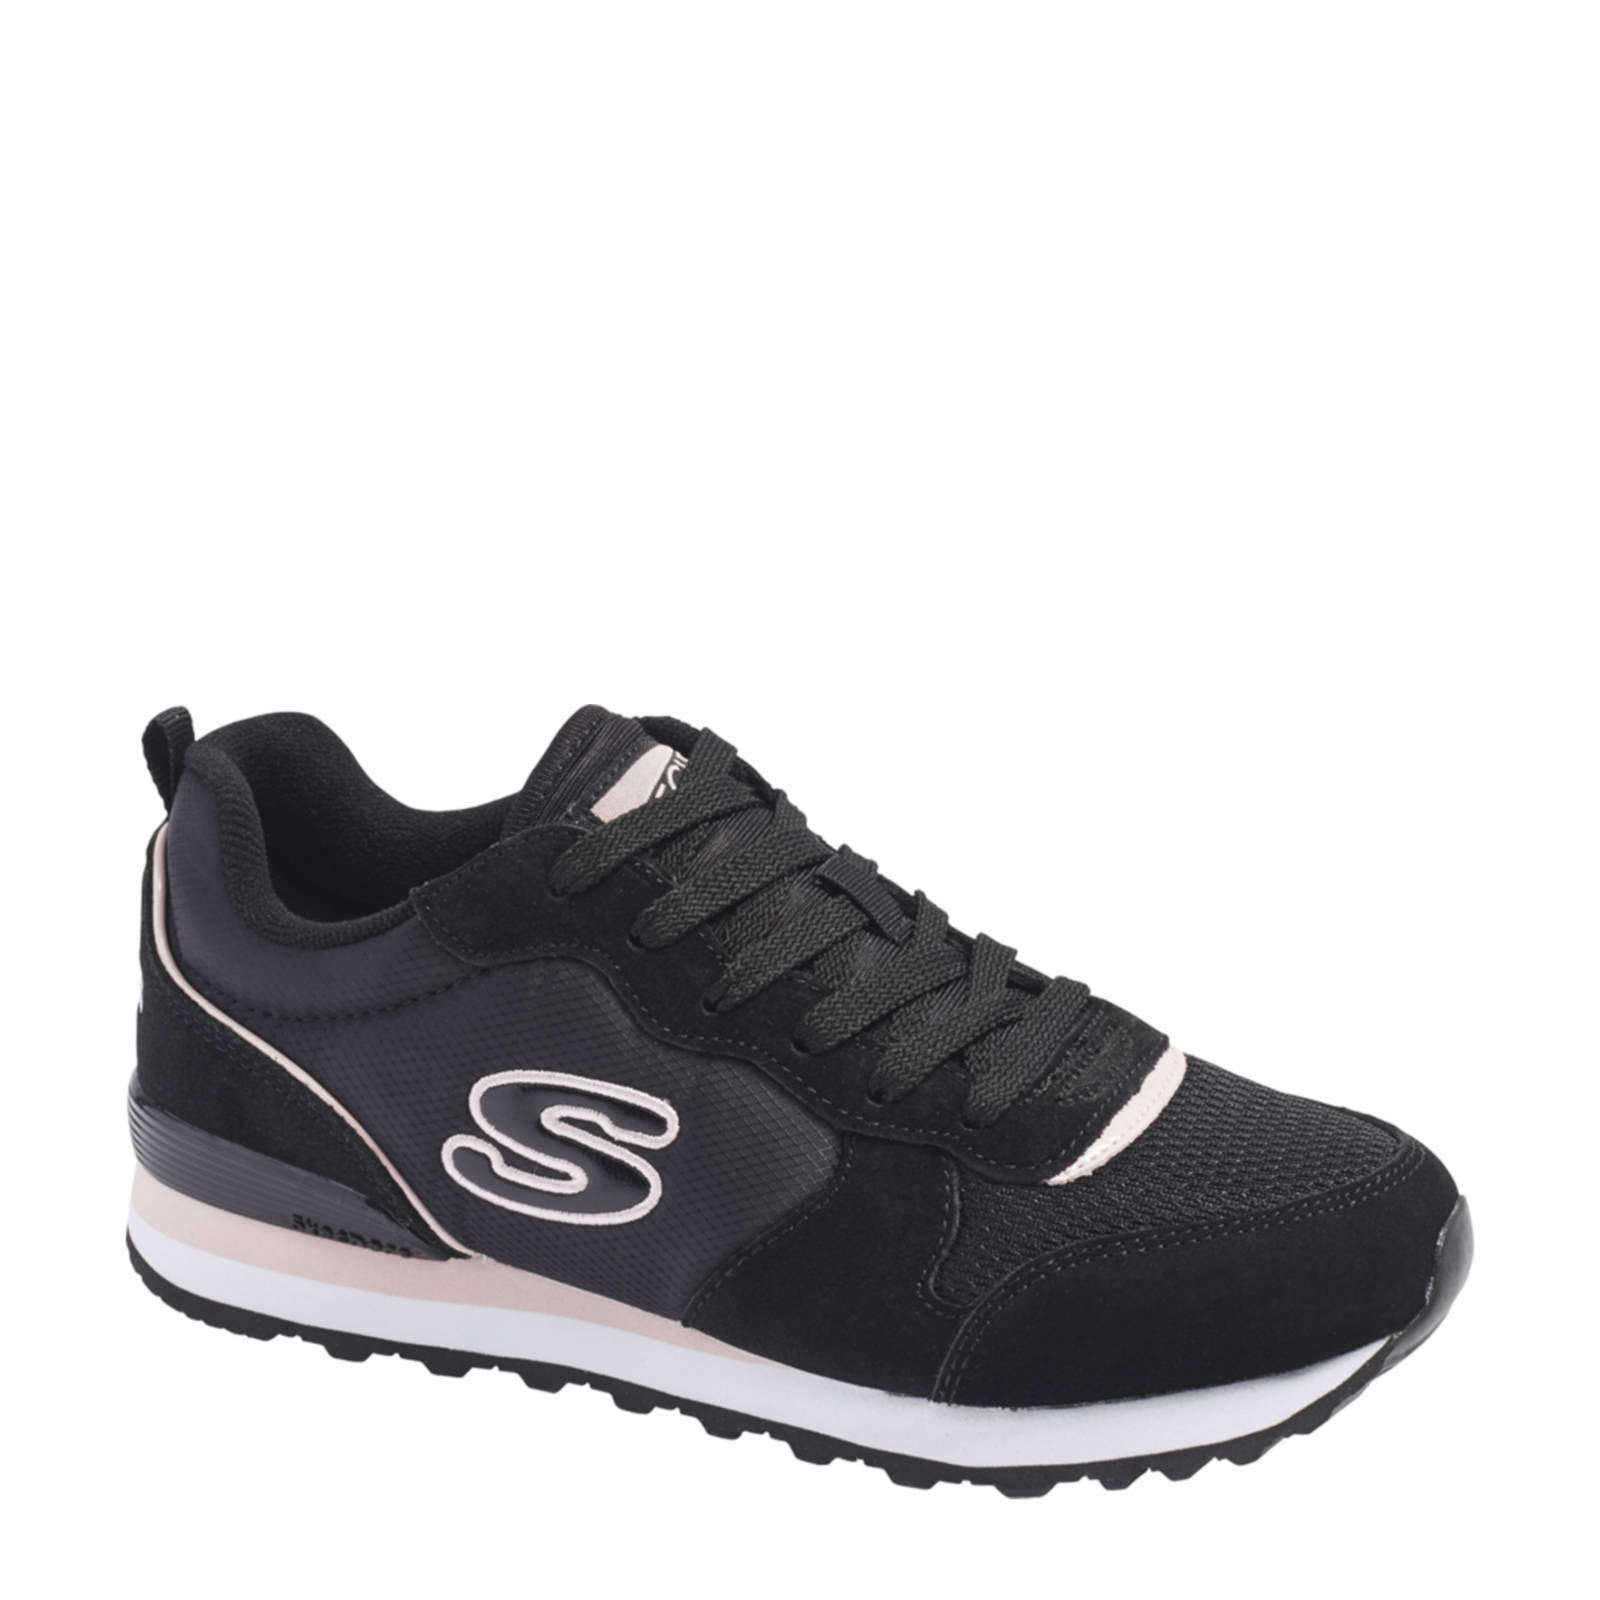 Skechers Originals OG 85 Step N Fly dames sneakers online kopen